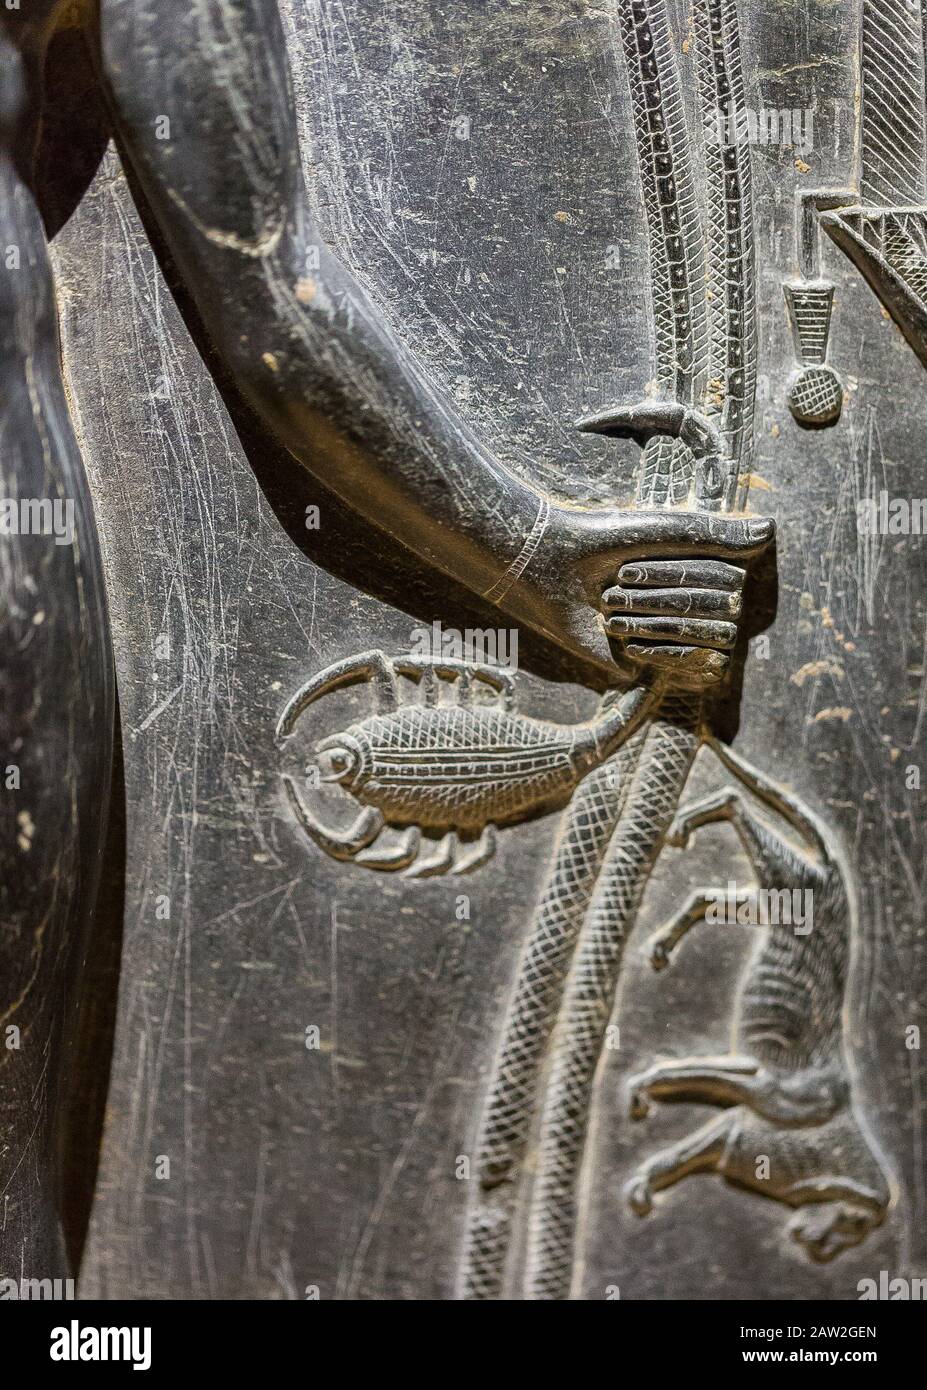 Photo taken during the opening visit of the exhibition “Osiris, Egypt's Sunken Mysteries”. Egypt, Cairo, Egyptian Museum, detail of an Horus stela. Stock Photo